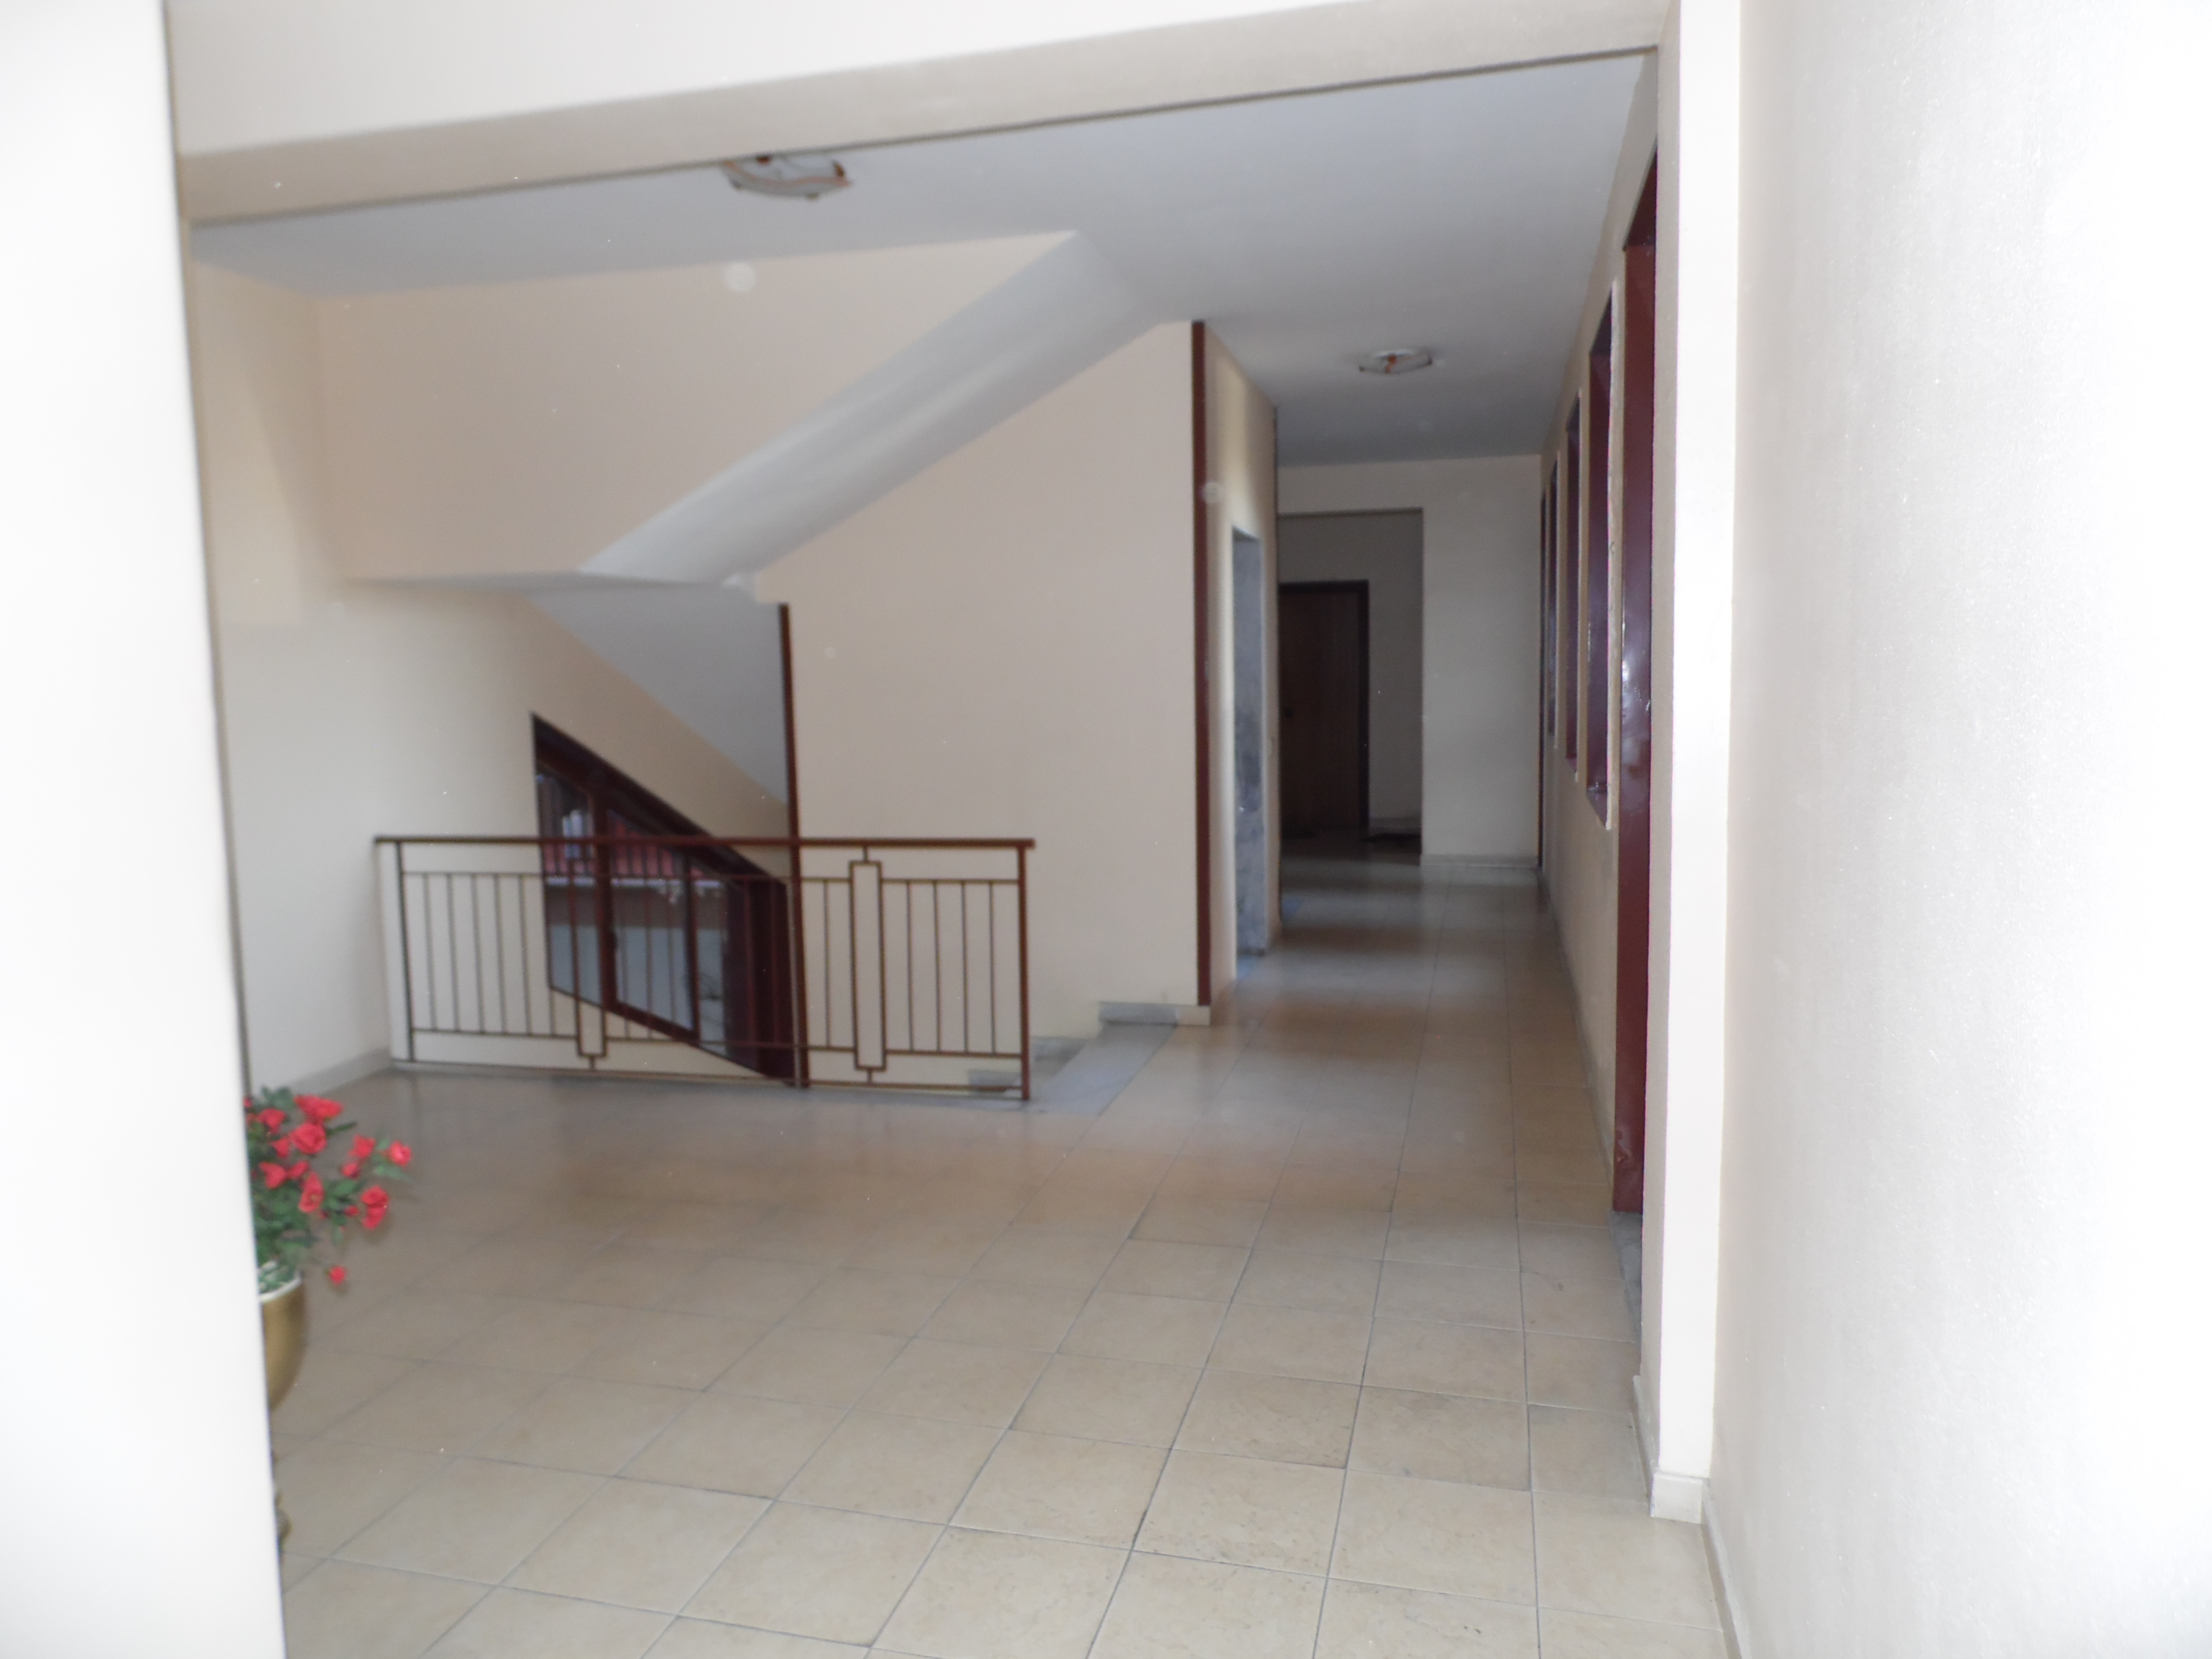 Appartamento 5 vani + garage zona “Balatelle” – Sant’Agata Li Battiati